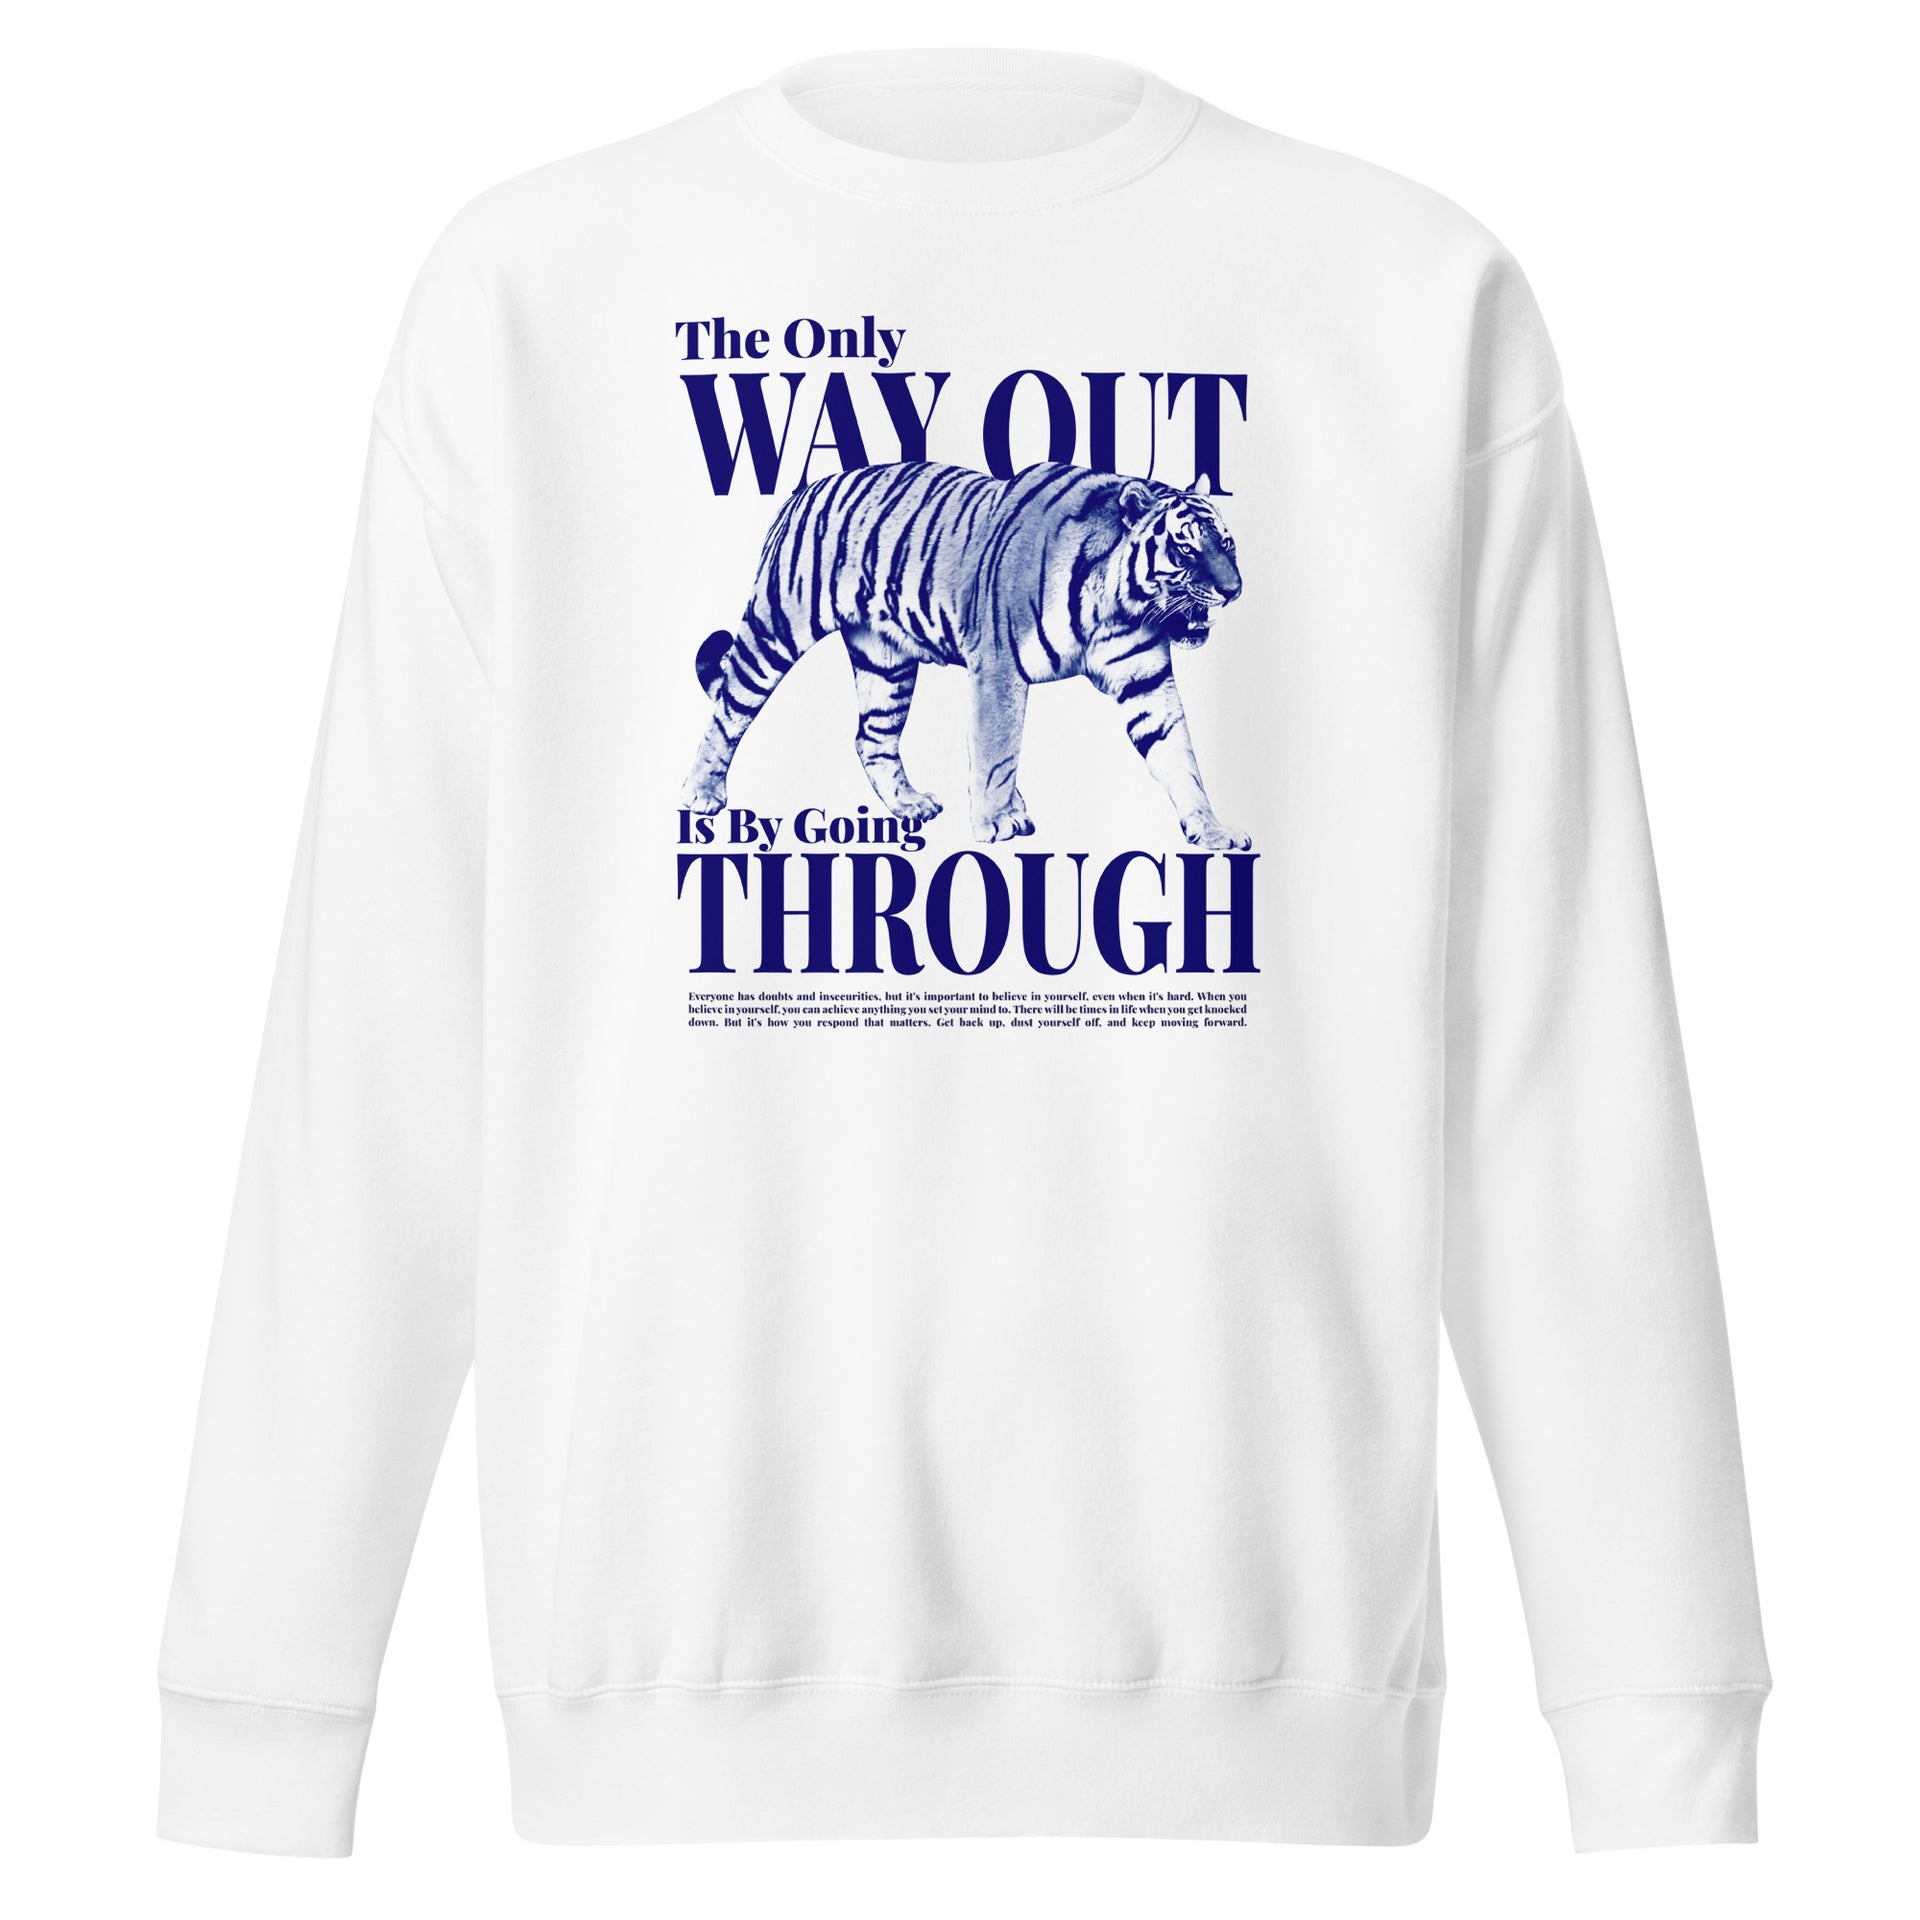 Powerful Tiger Quote Unisex Sweatshirt